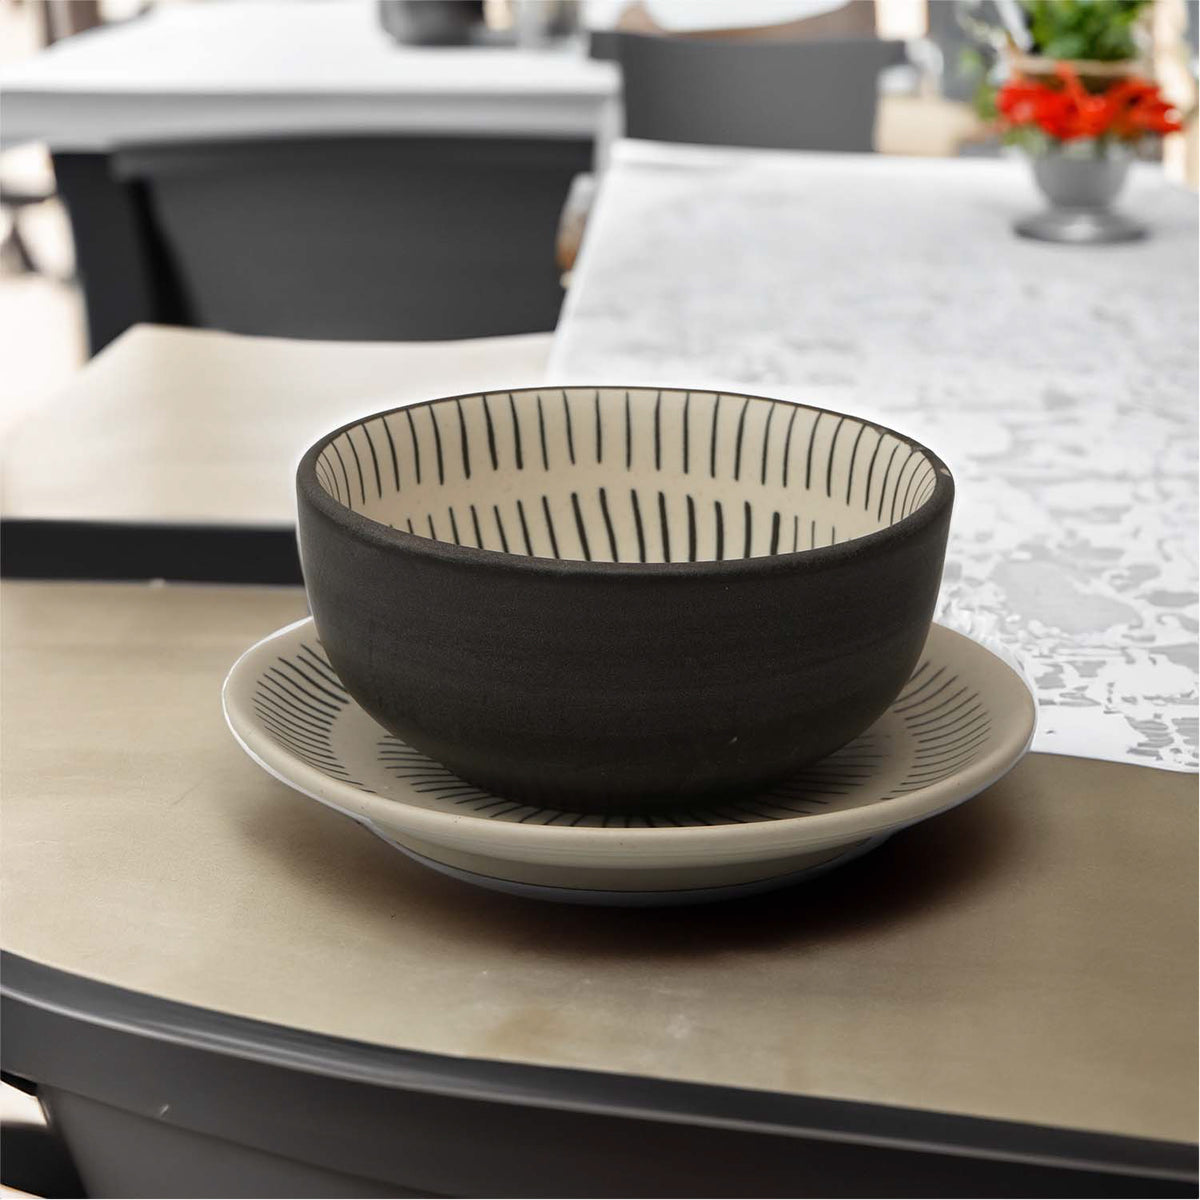 Claymistry Ceramic Hand-painted Black & White Soup Bowl & Serving Plate | Set of 2 | Plate 18cm * 18cm * 2cm | Bowl 15cm * 15cm * 7cm | Matte | Dishwasher & Microwave Safe | Kitchen Crockery